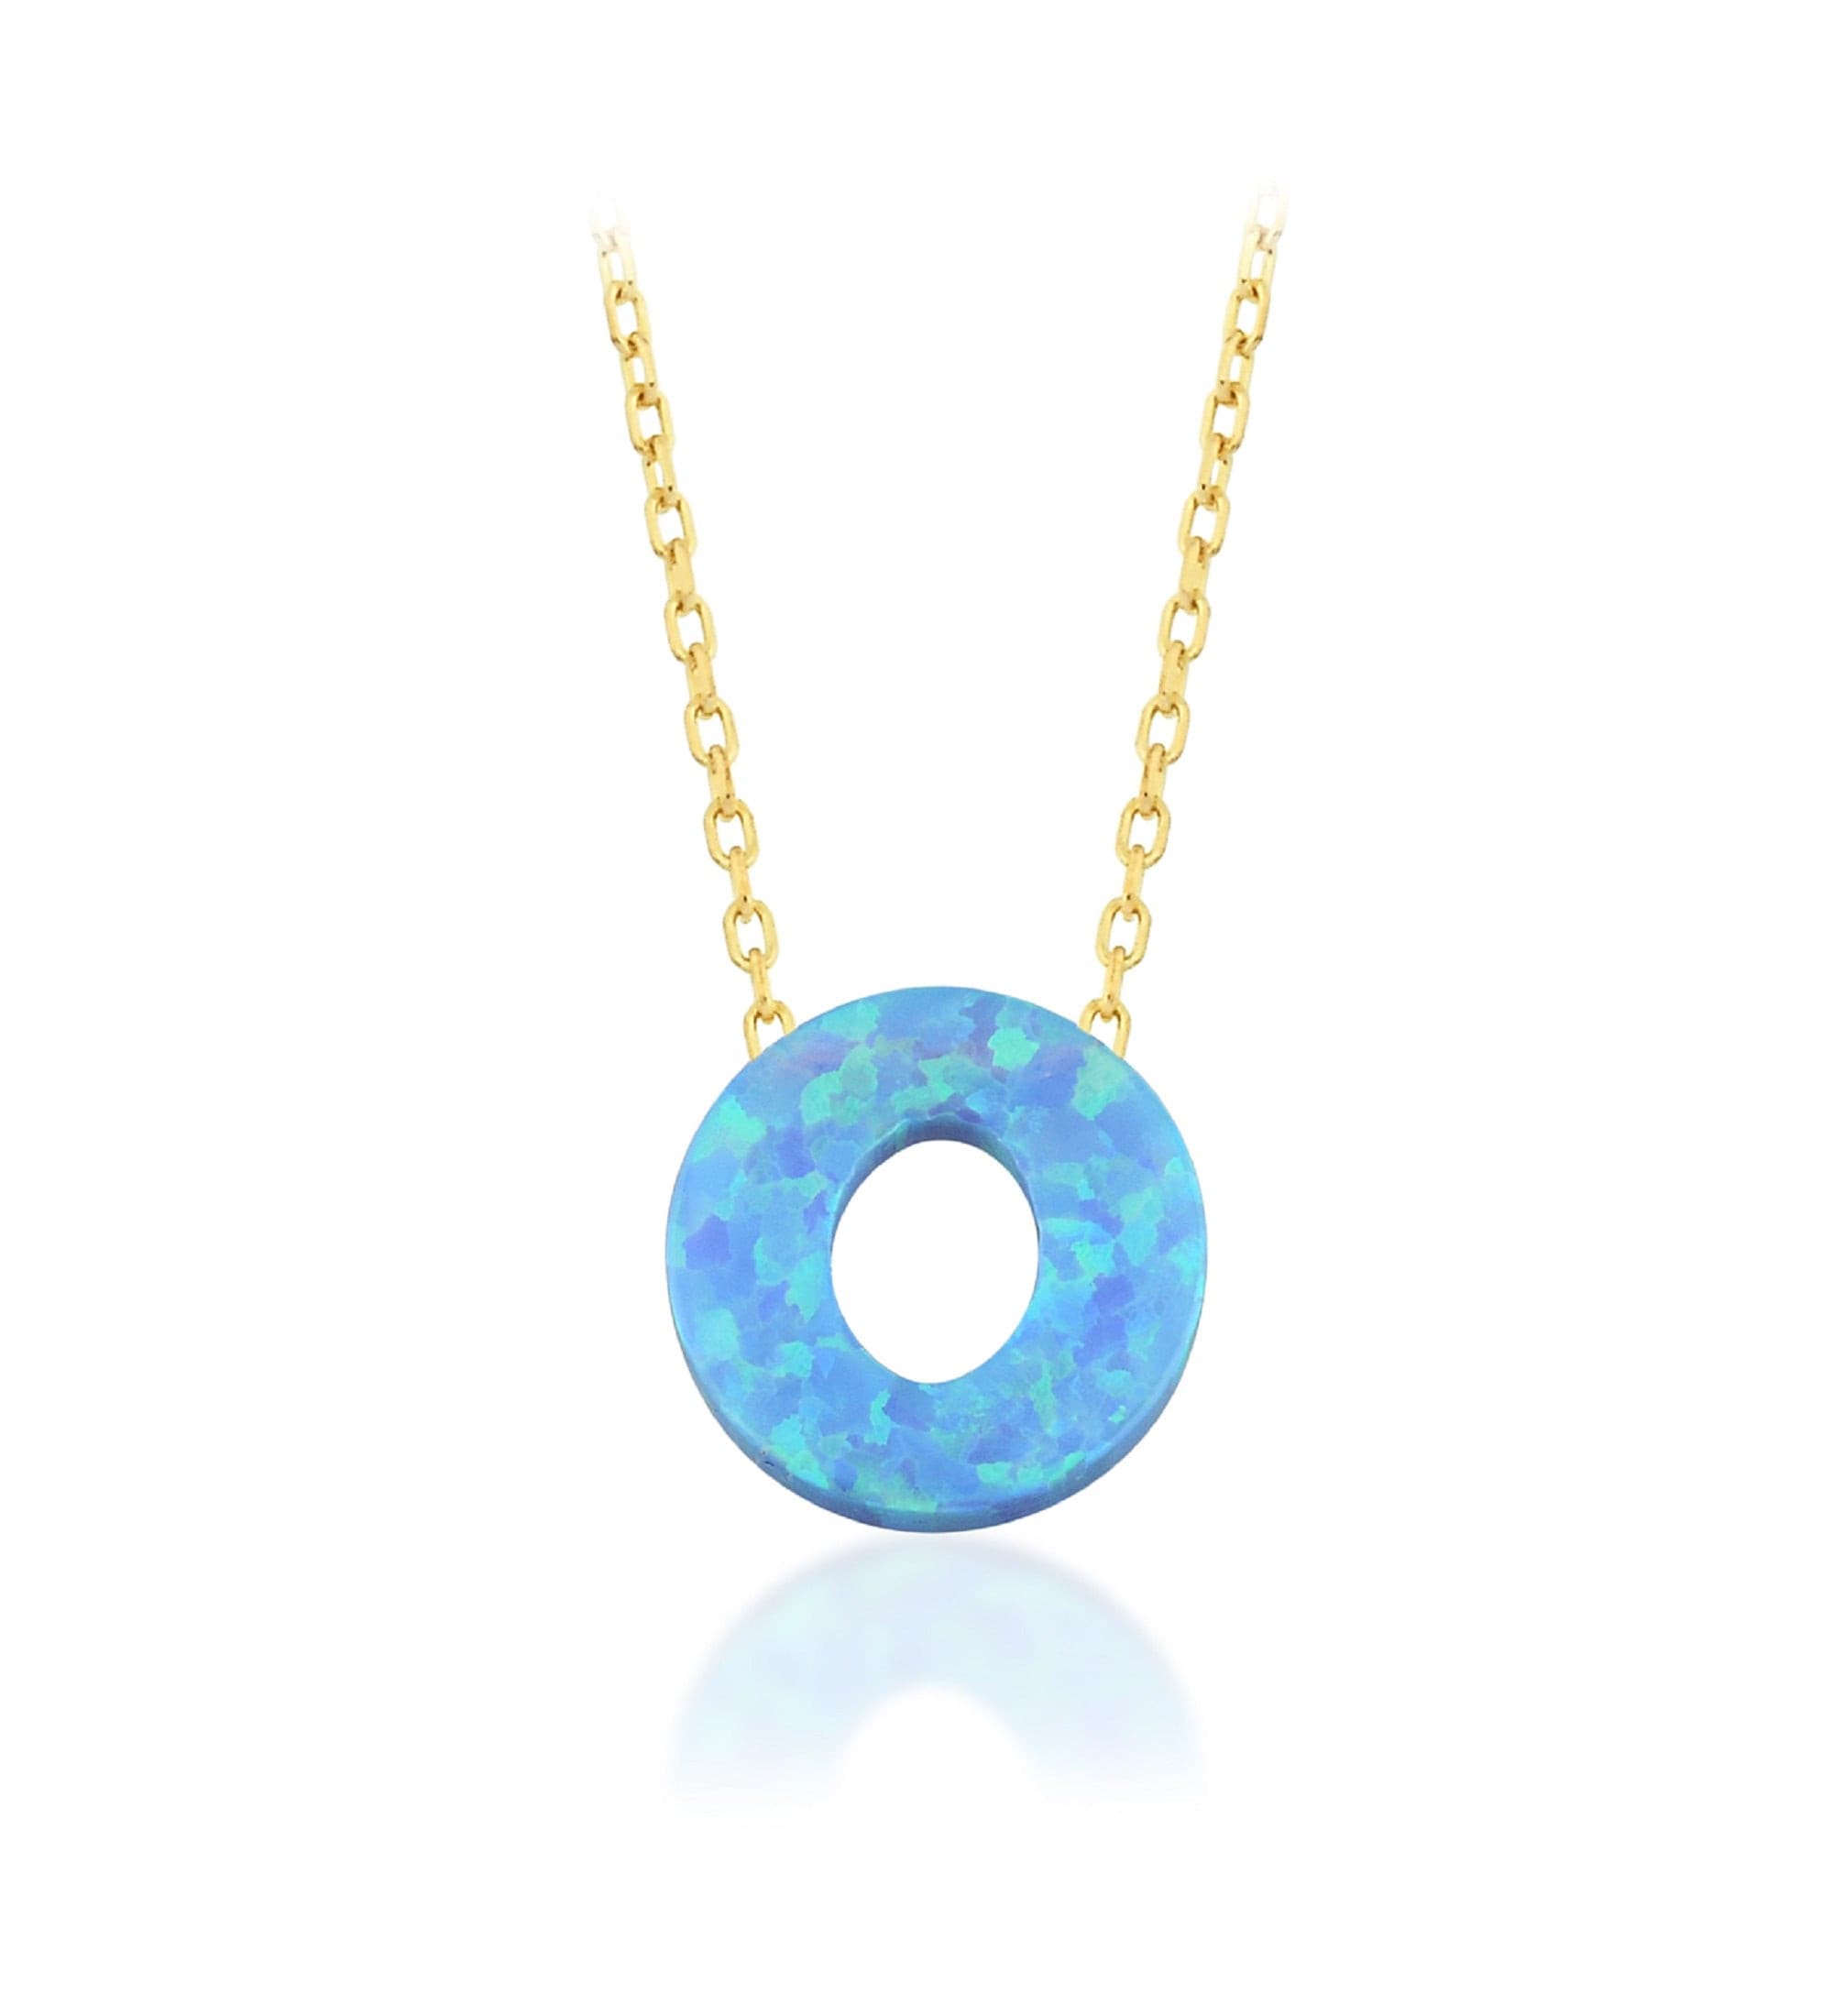 Blue Opal Initial Necklace - "O" letter pendant